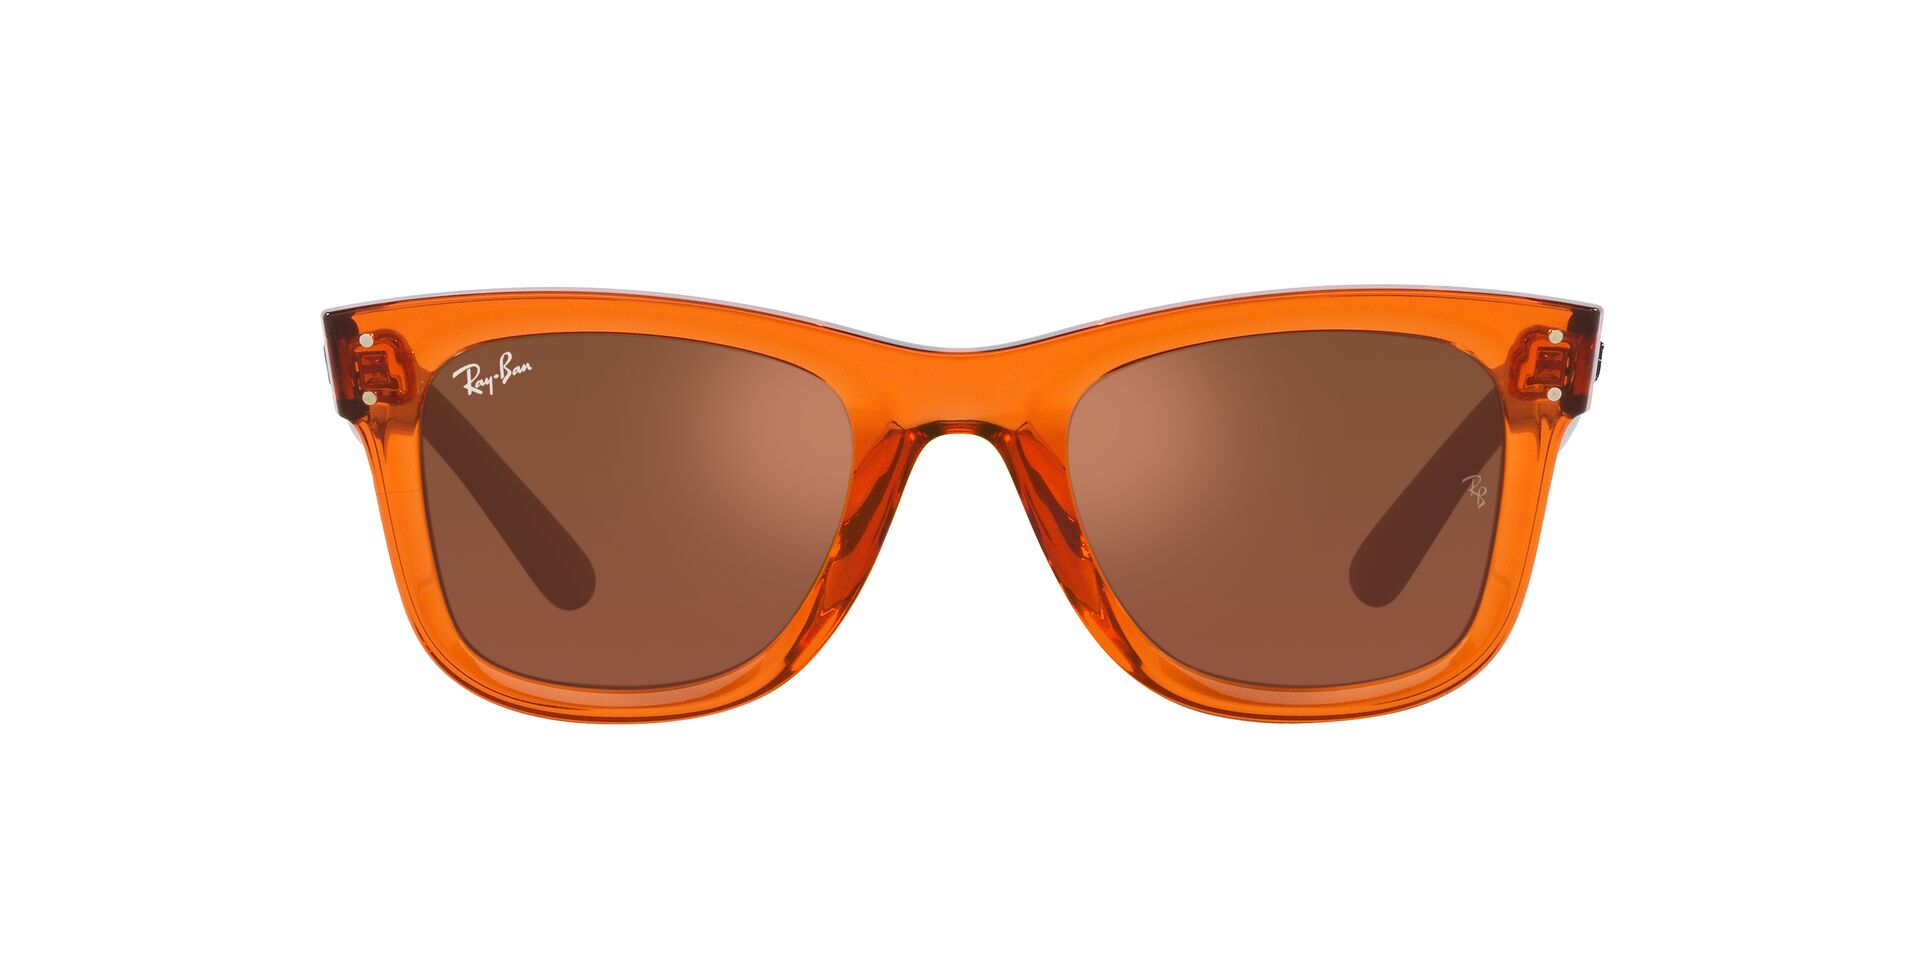 Ray-Ban RB2132 New Wayfarer Colour Mix Sunglasses, Navy/Orange